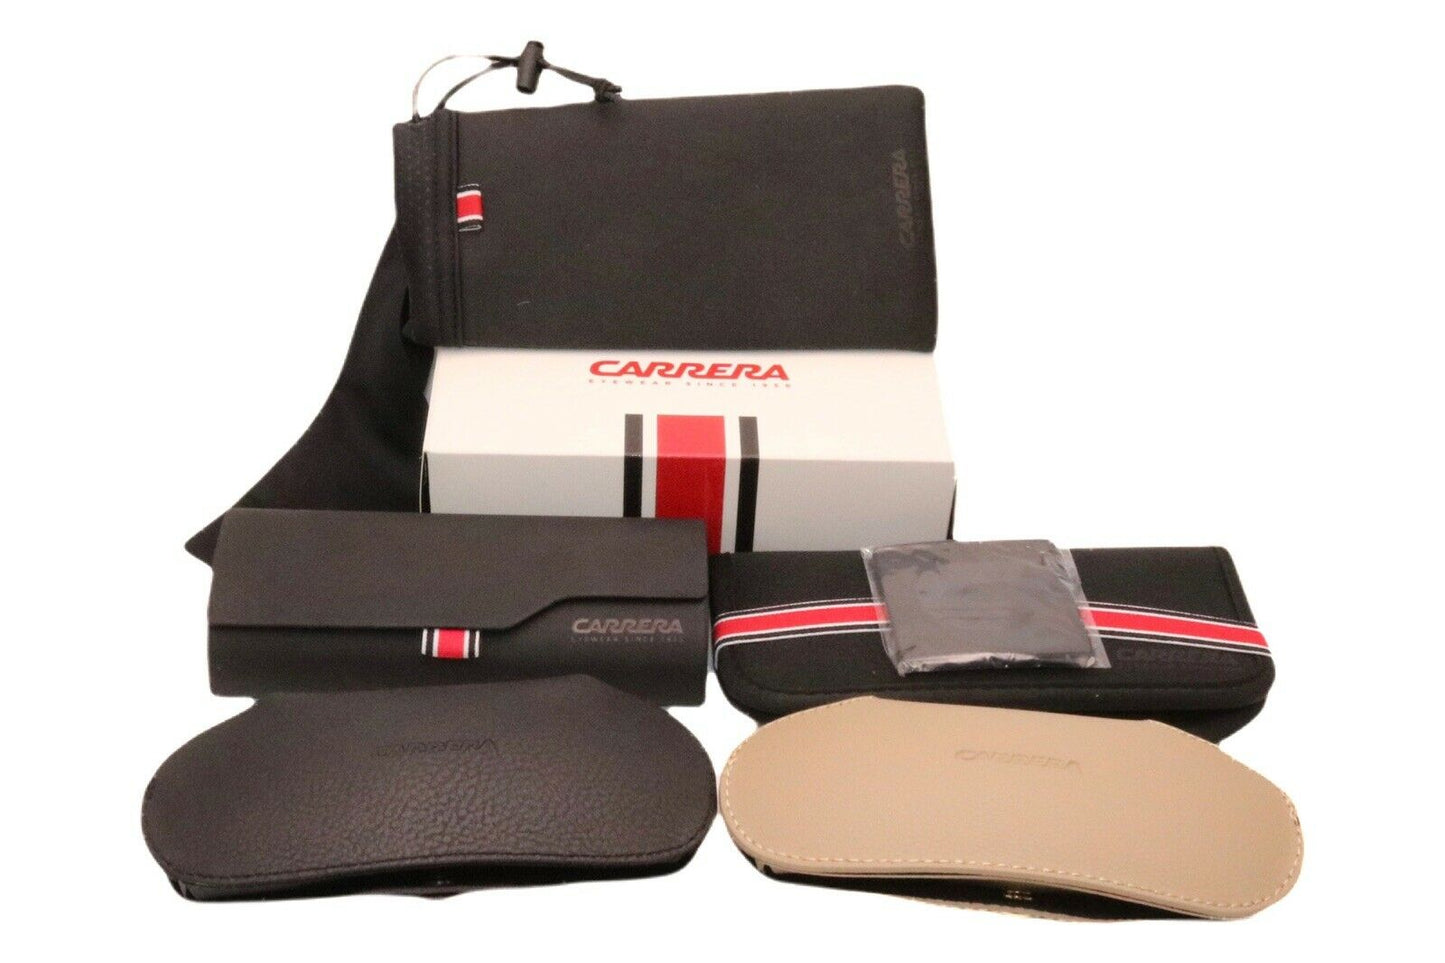 Carrera CARRERA 244-04C3 00 54mm New Eyeglasses